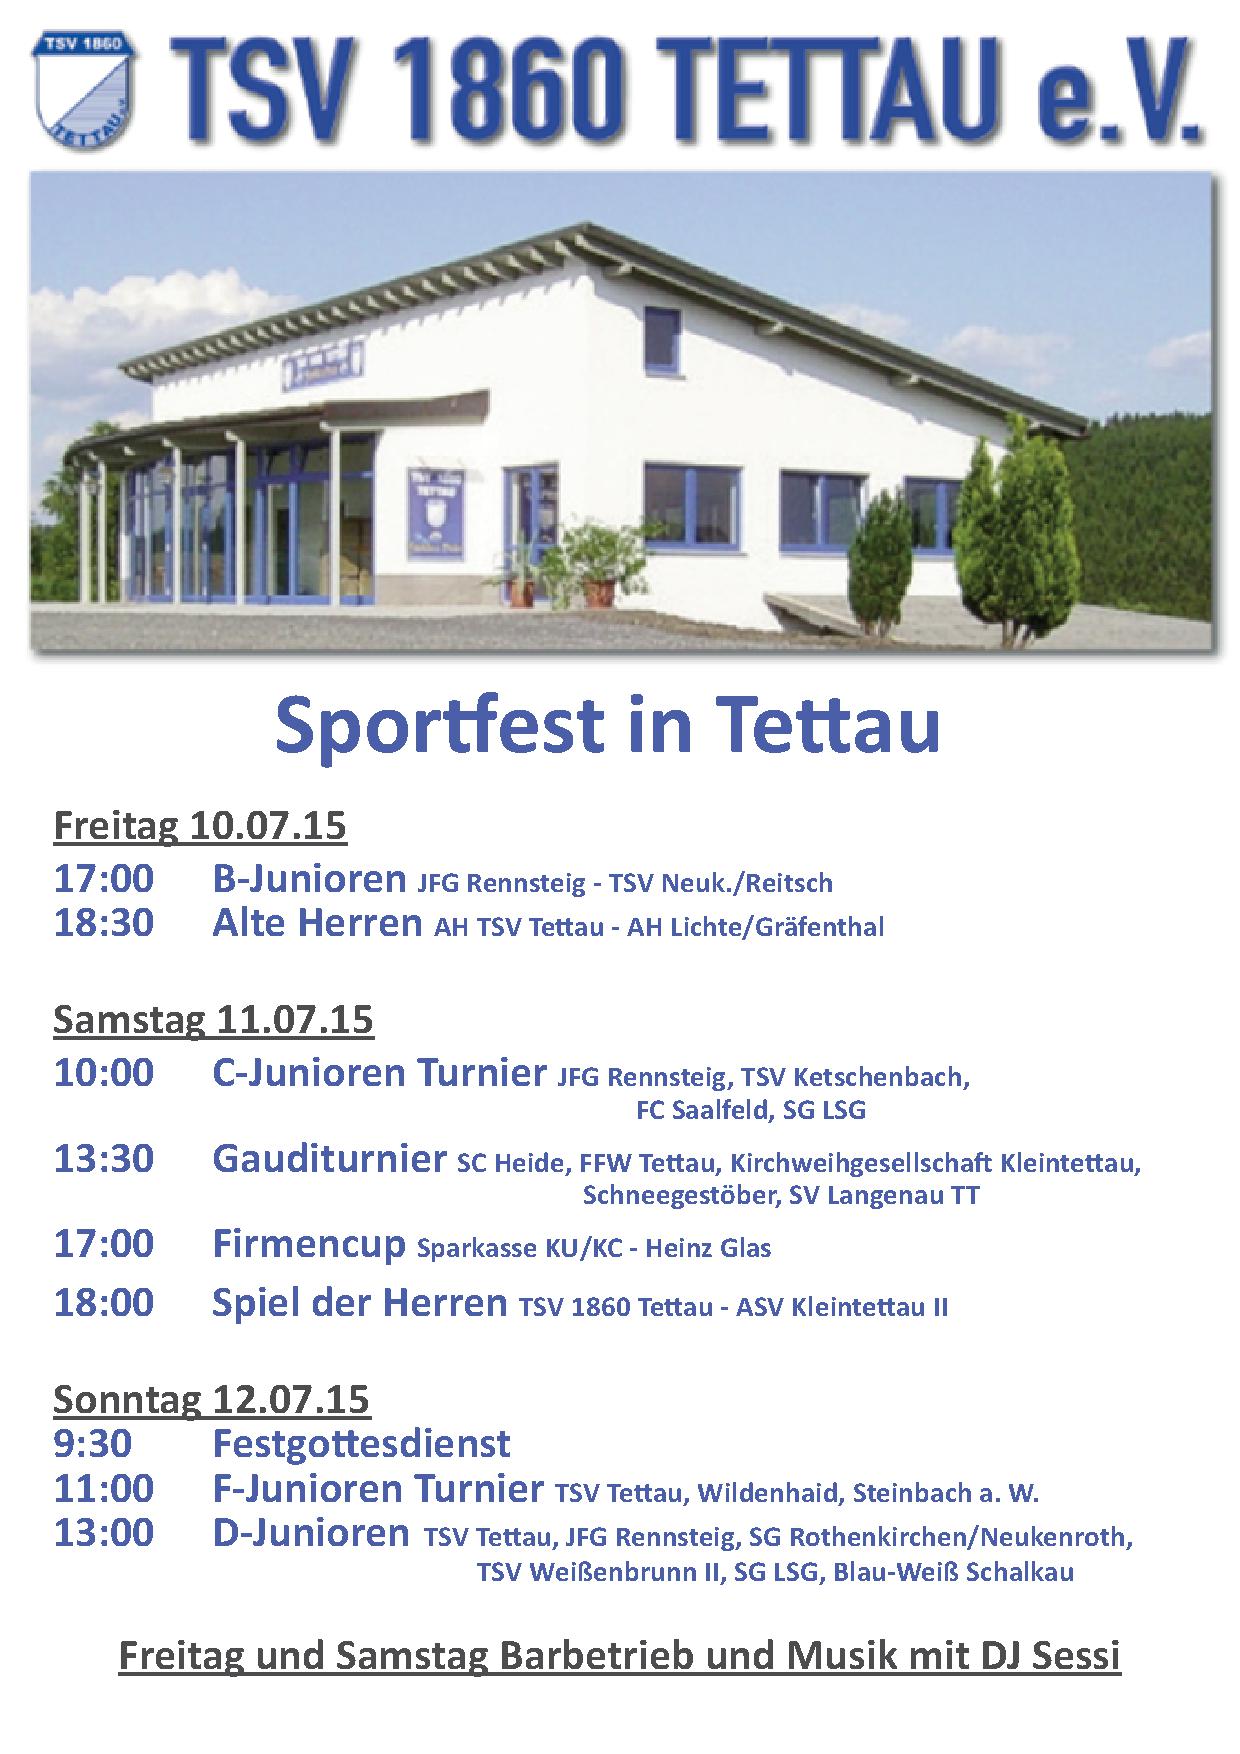 Sportfestprogramm 2015